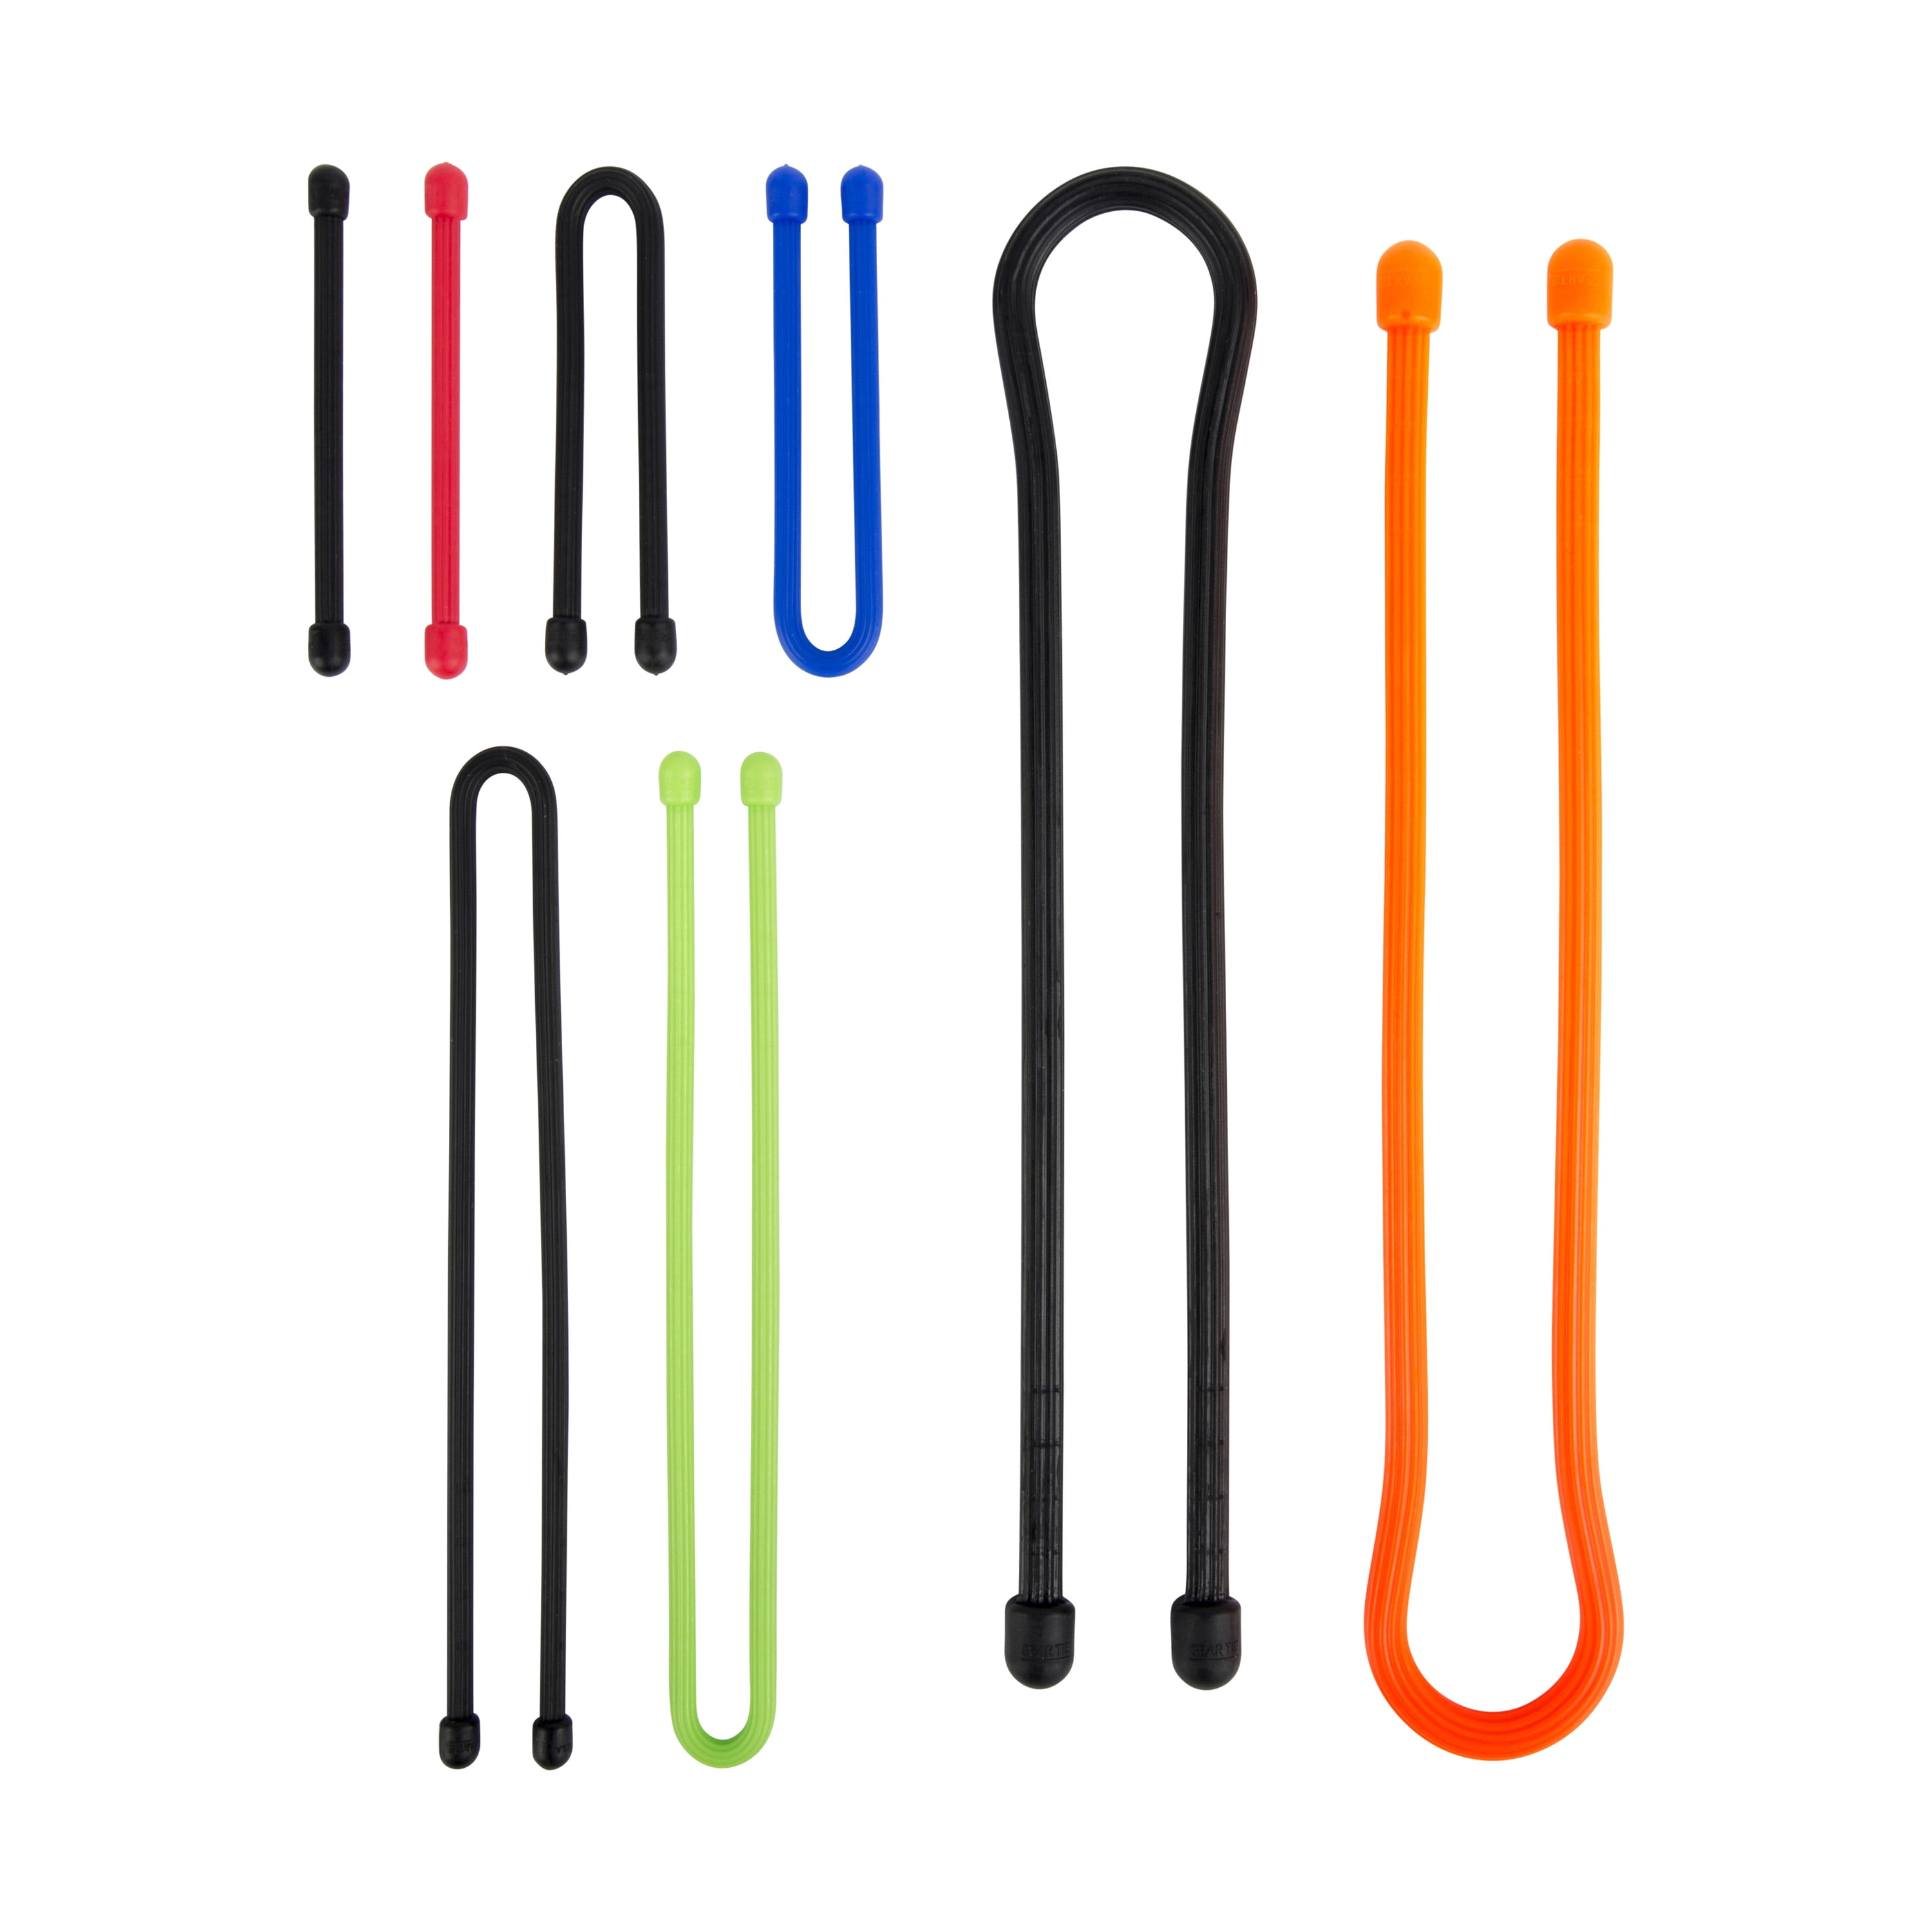 Reusable Rubber Twist Tie Nite Ize Original Gear Assorted Colors and Sizes 8 Pcs for sale online 